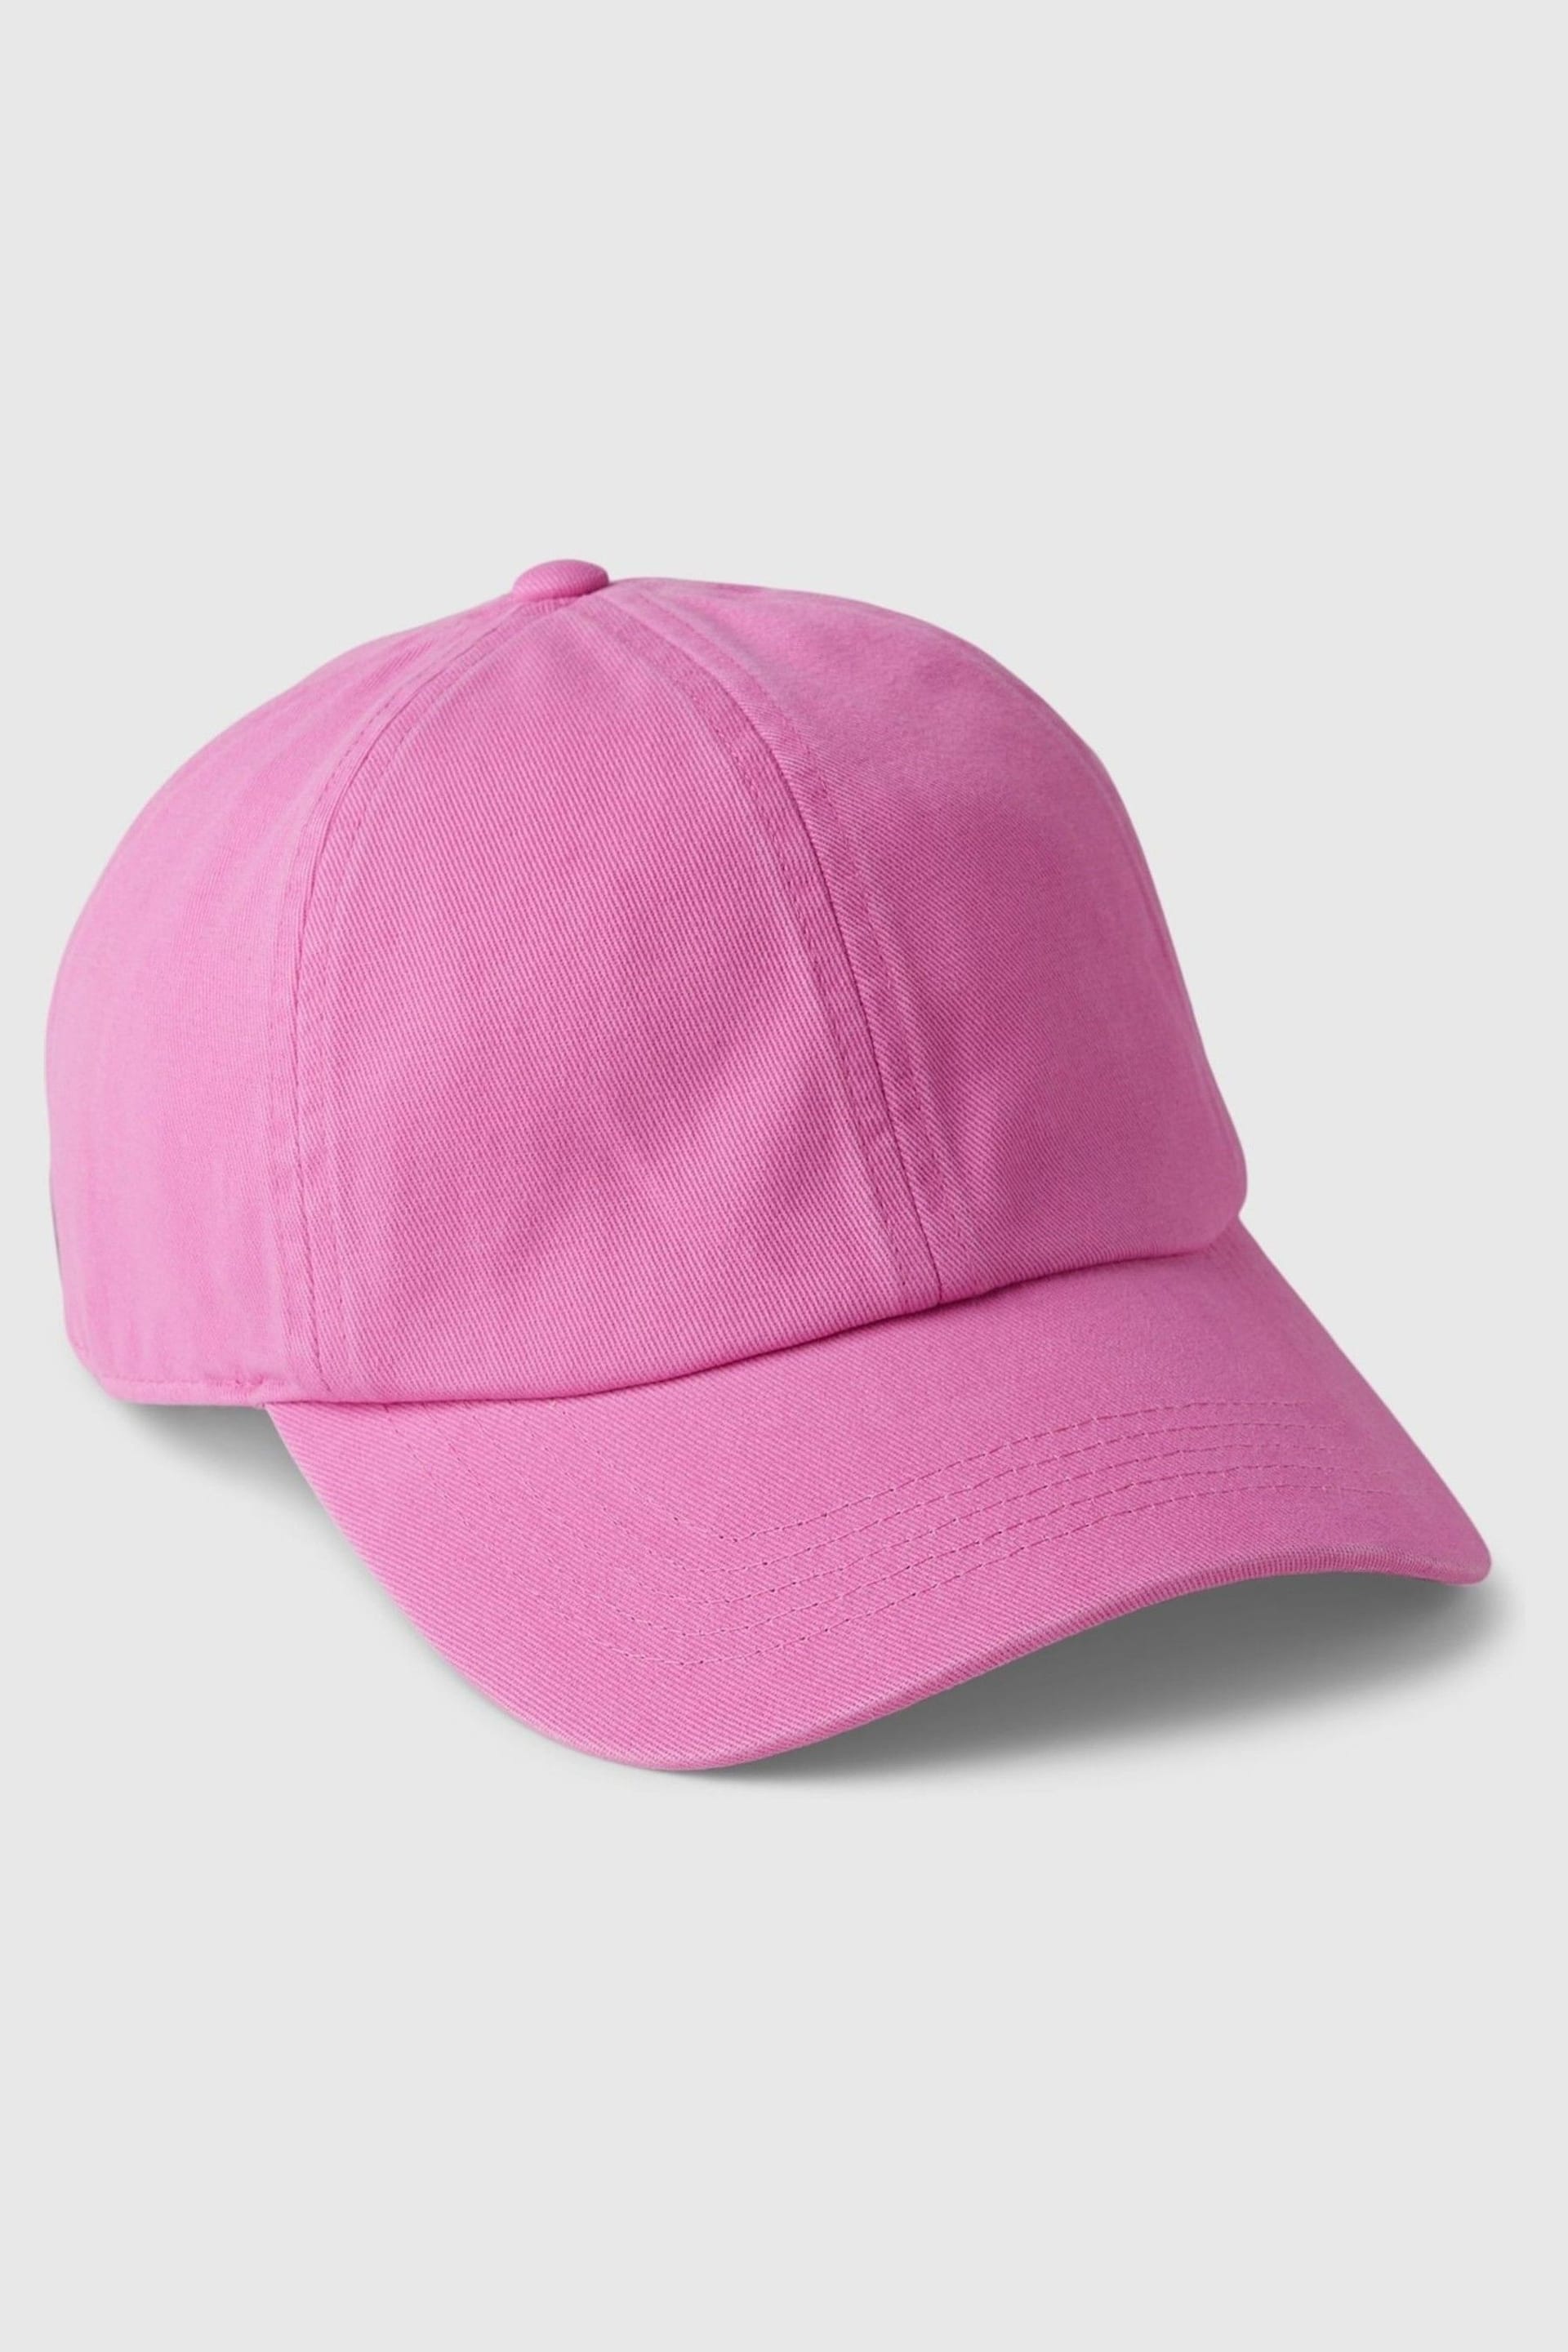 Gap Pink Adult Organic Cotton Washed Baseball Hat - Image 1 of 2